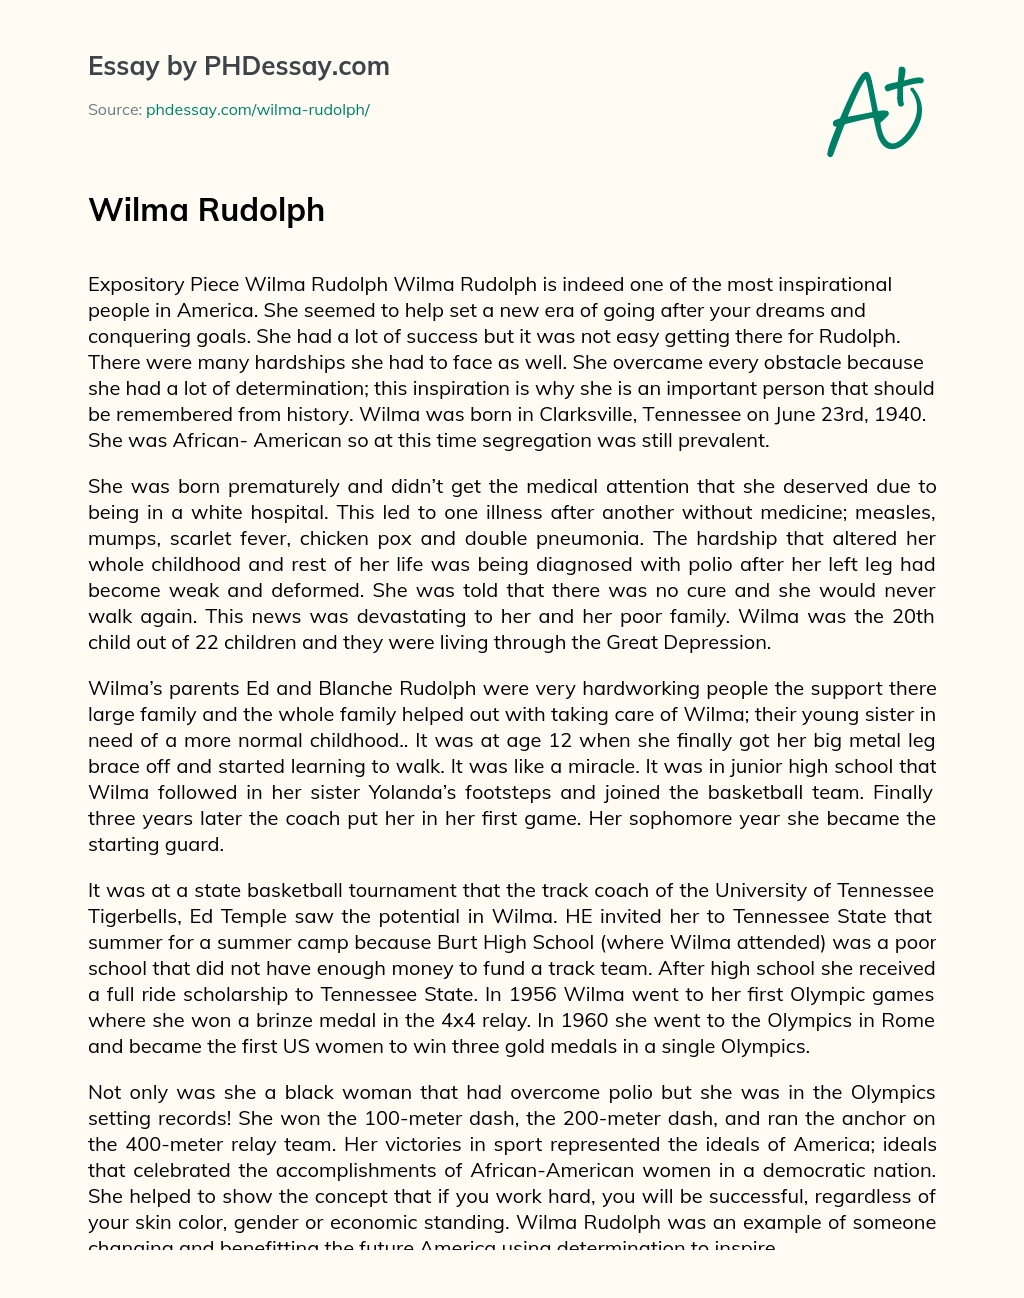 Wilma Rudolph essay